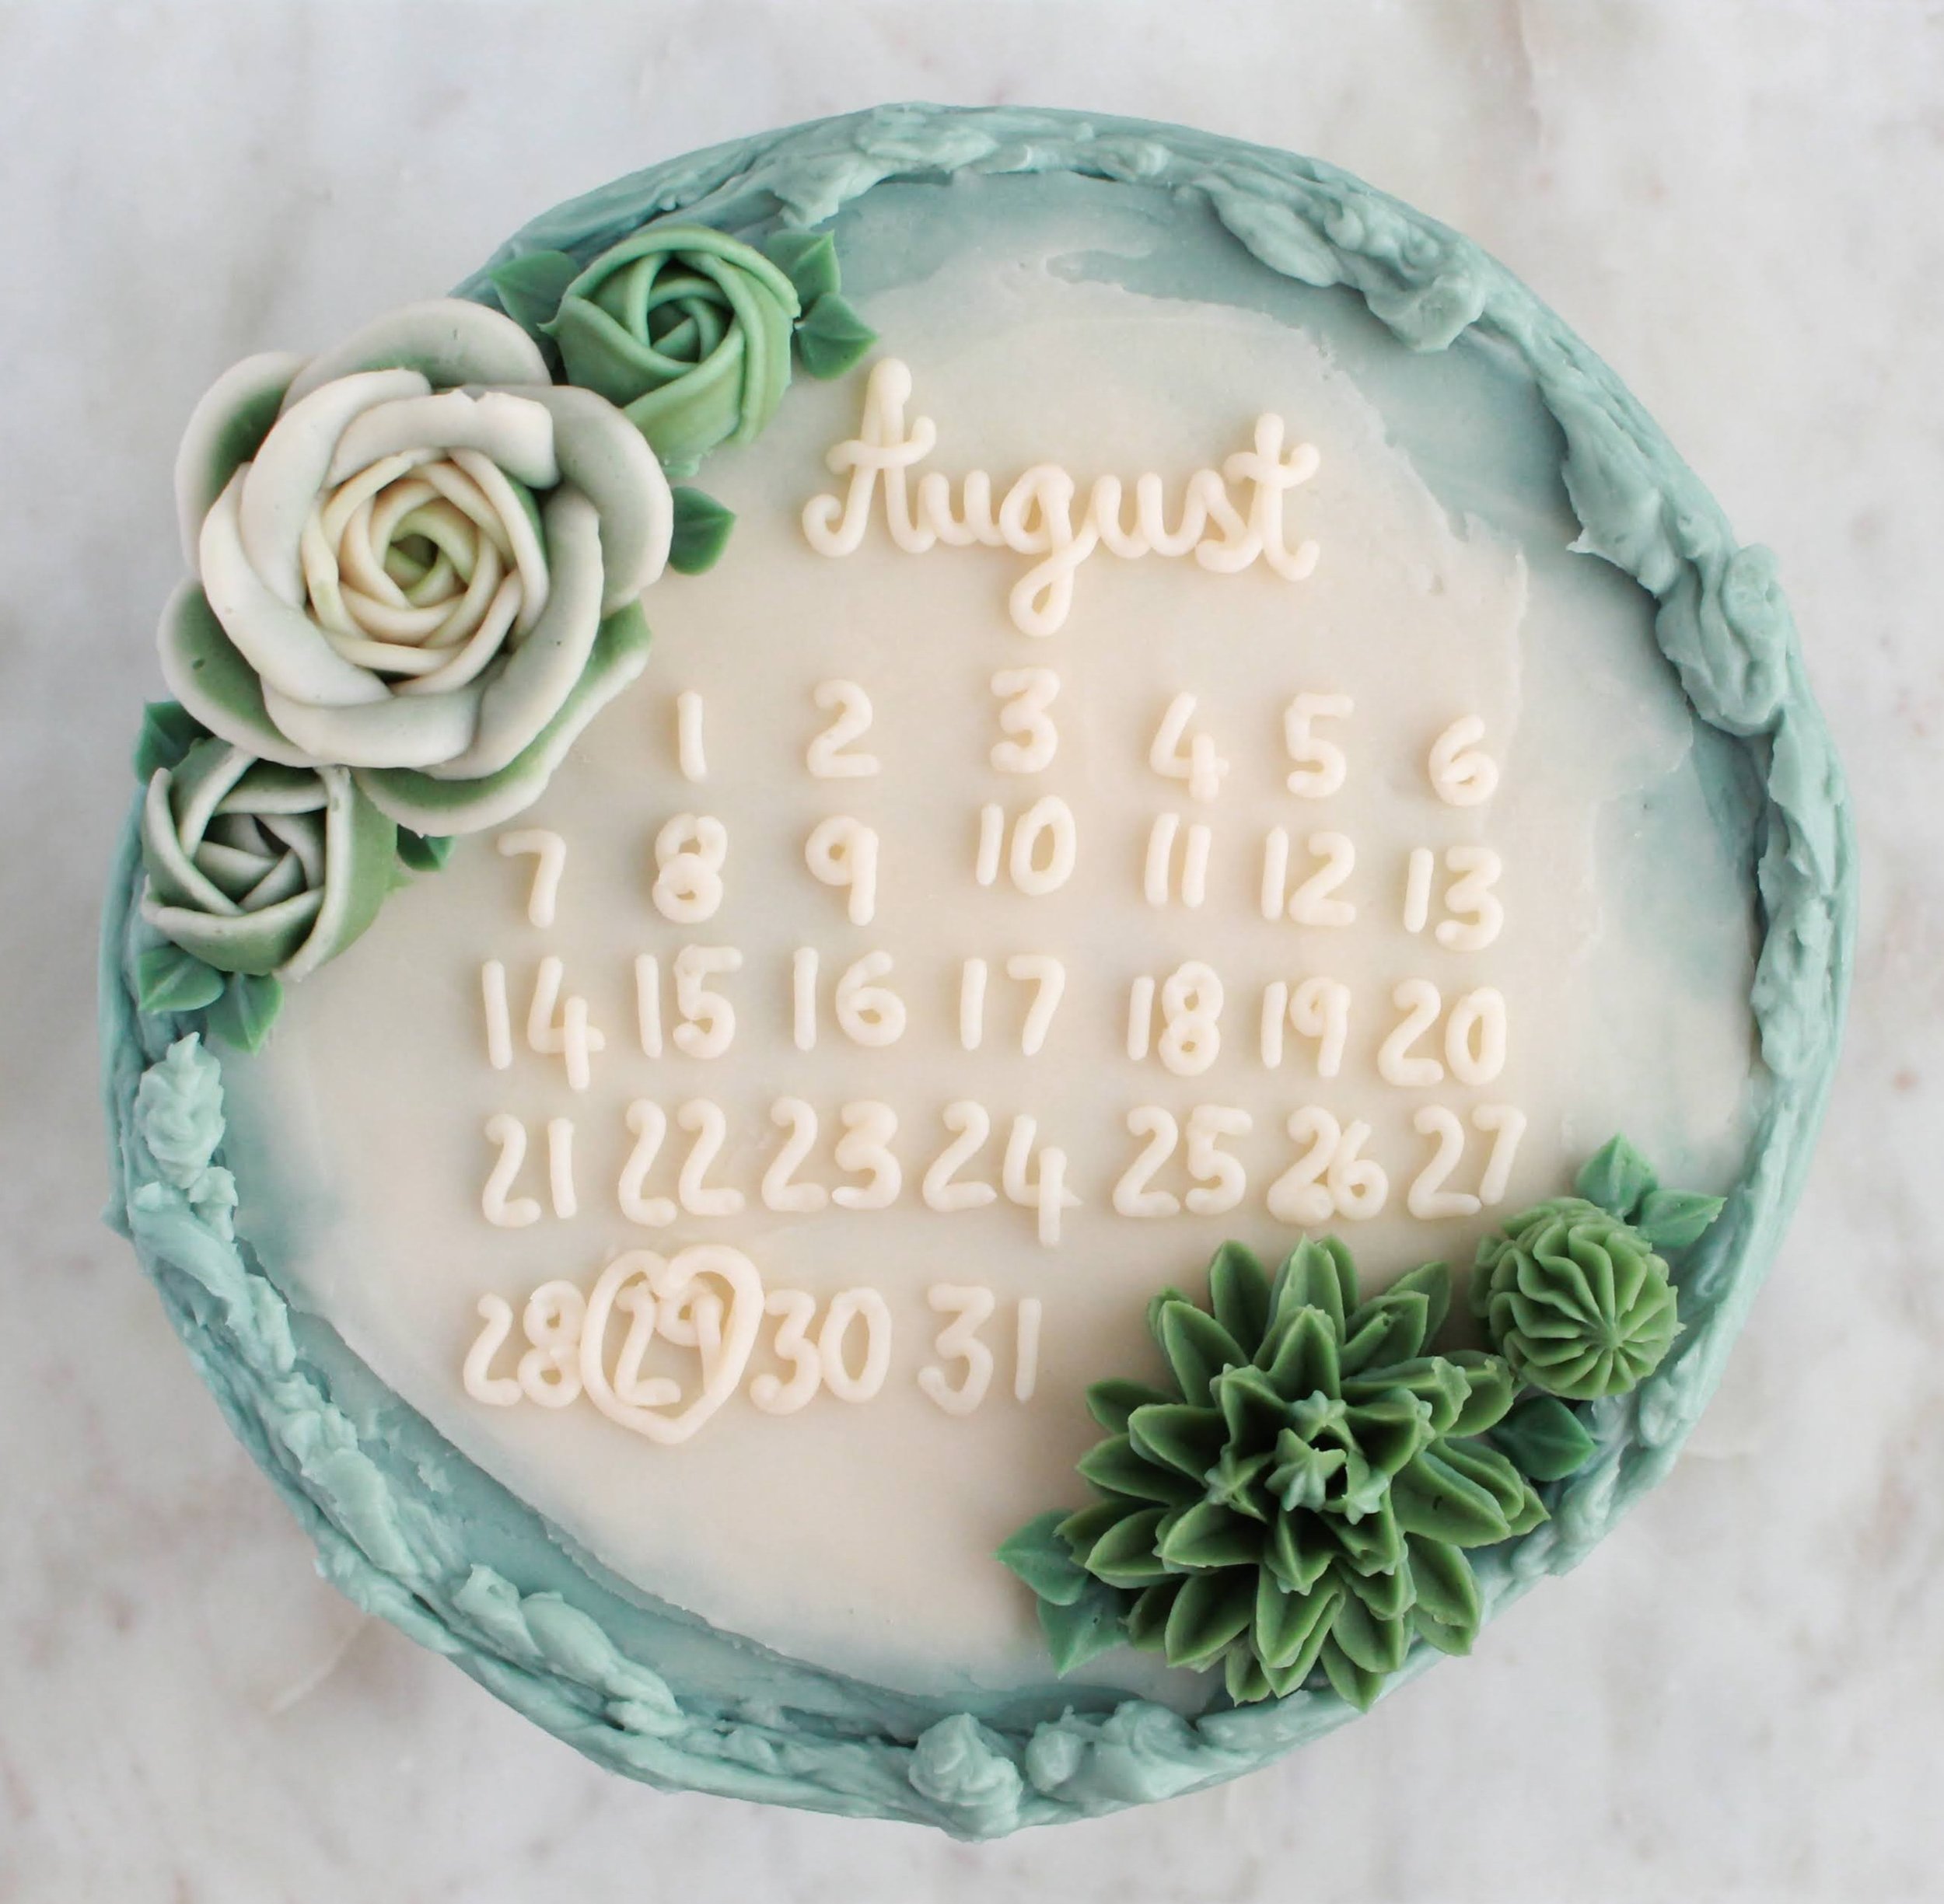 Calendar Birthday Cake | Baked by Nataleen